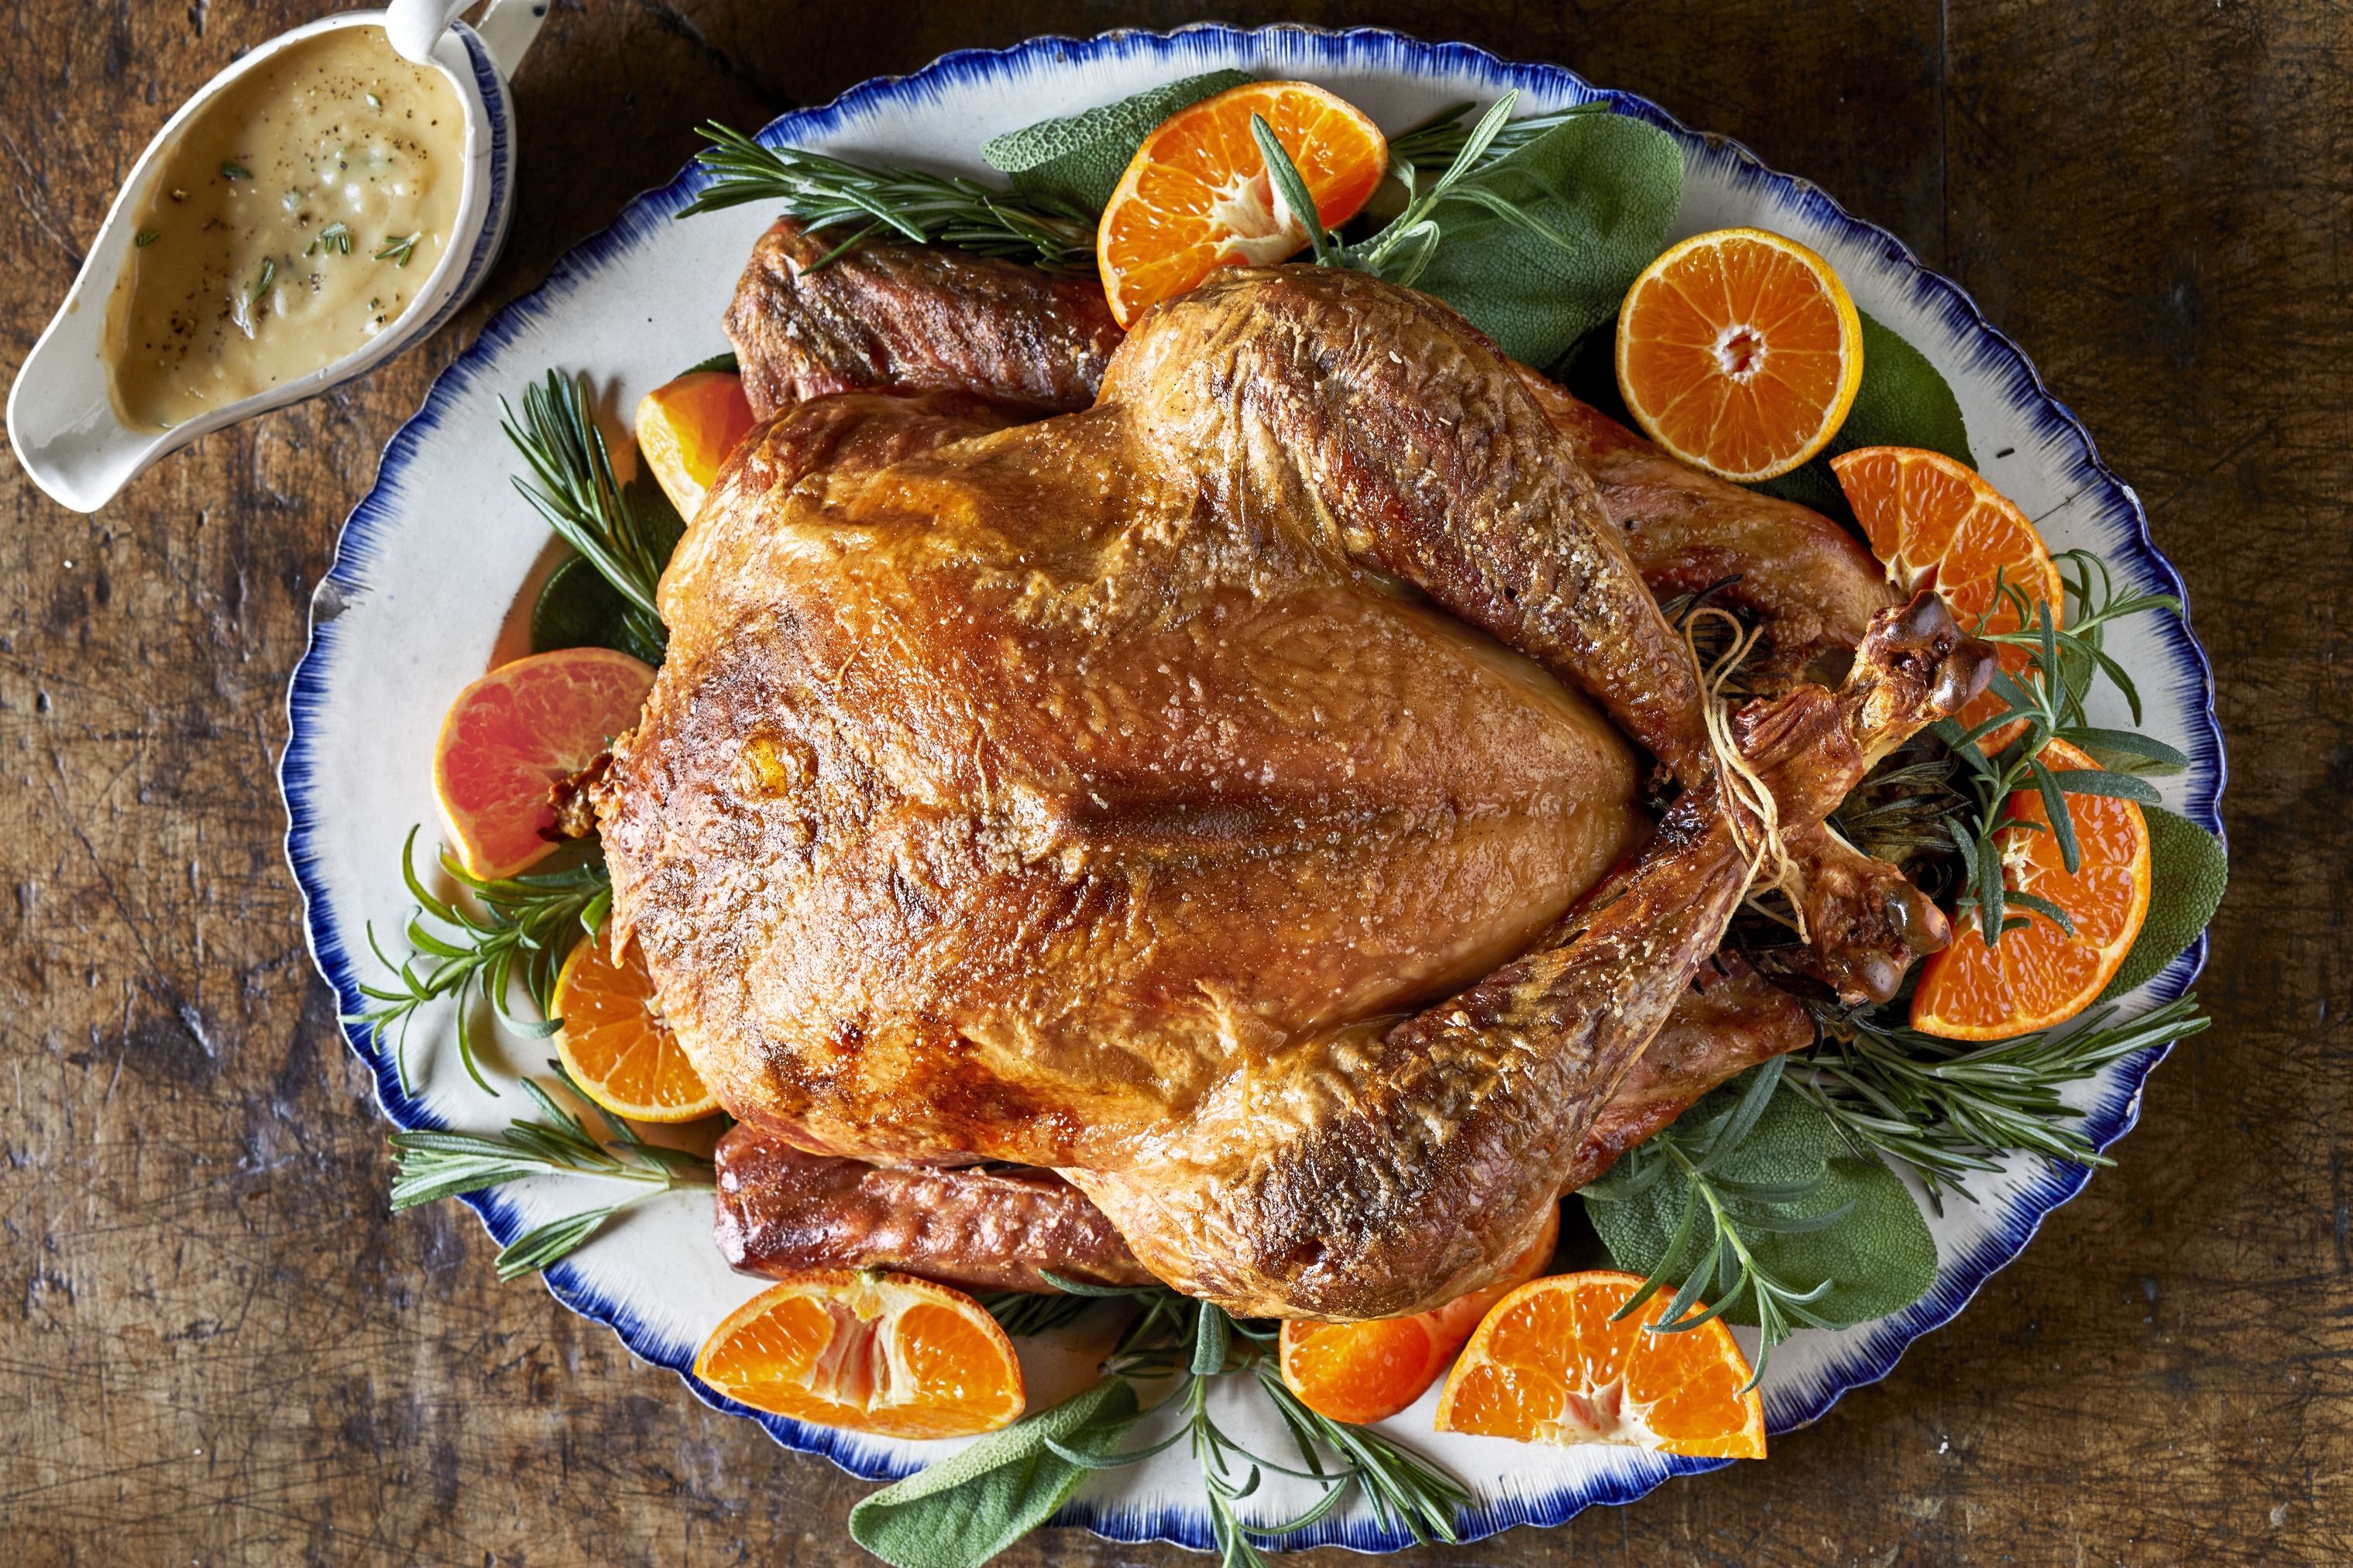 https://hips.hearstapps.com/hmg-prod/images/seasoned-roasted-turkey-recipe-copy-1568923950.jpg